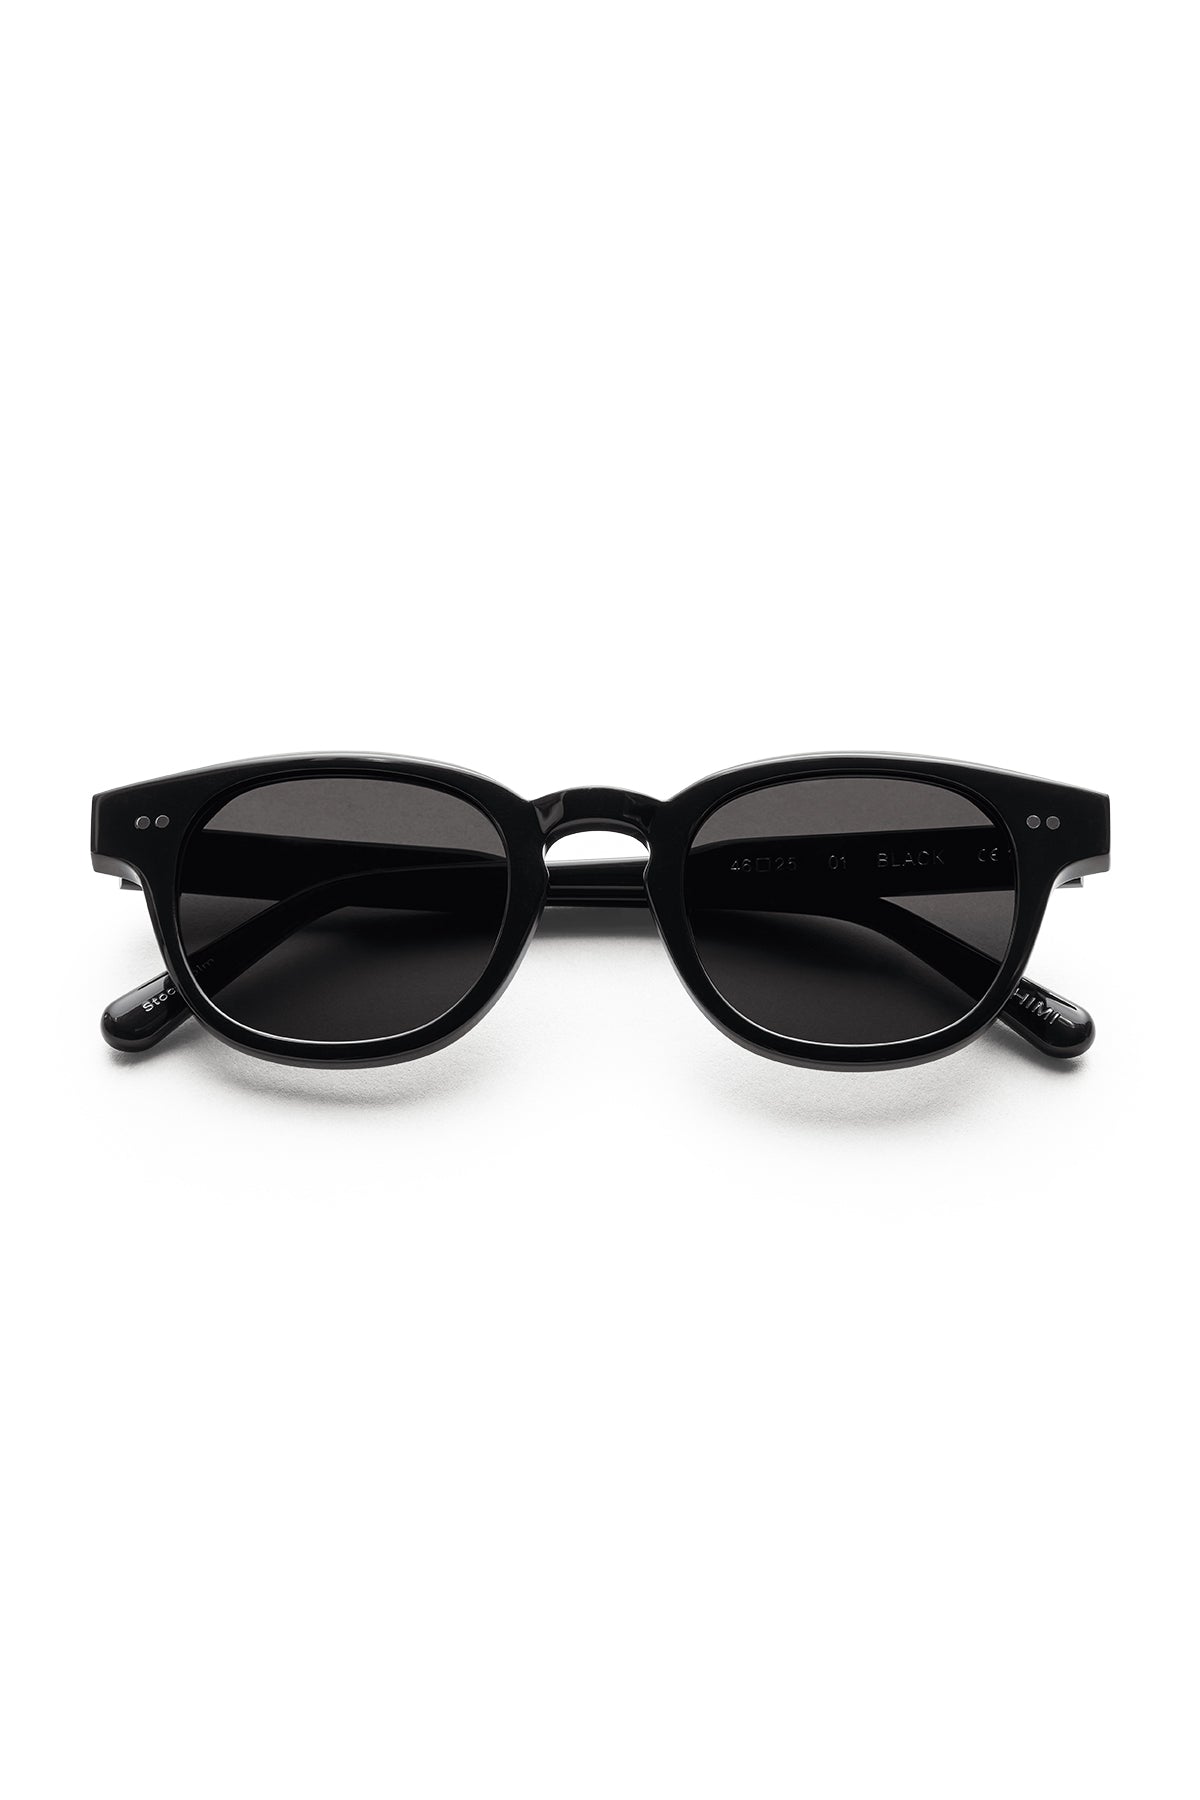 Chimi 01 Sunglasses Black Front-22132427194561